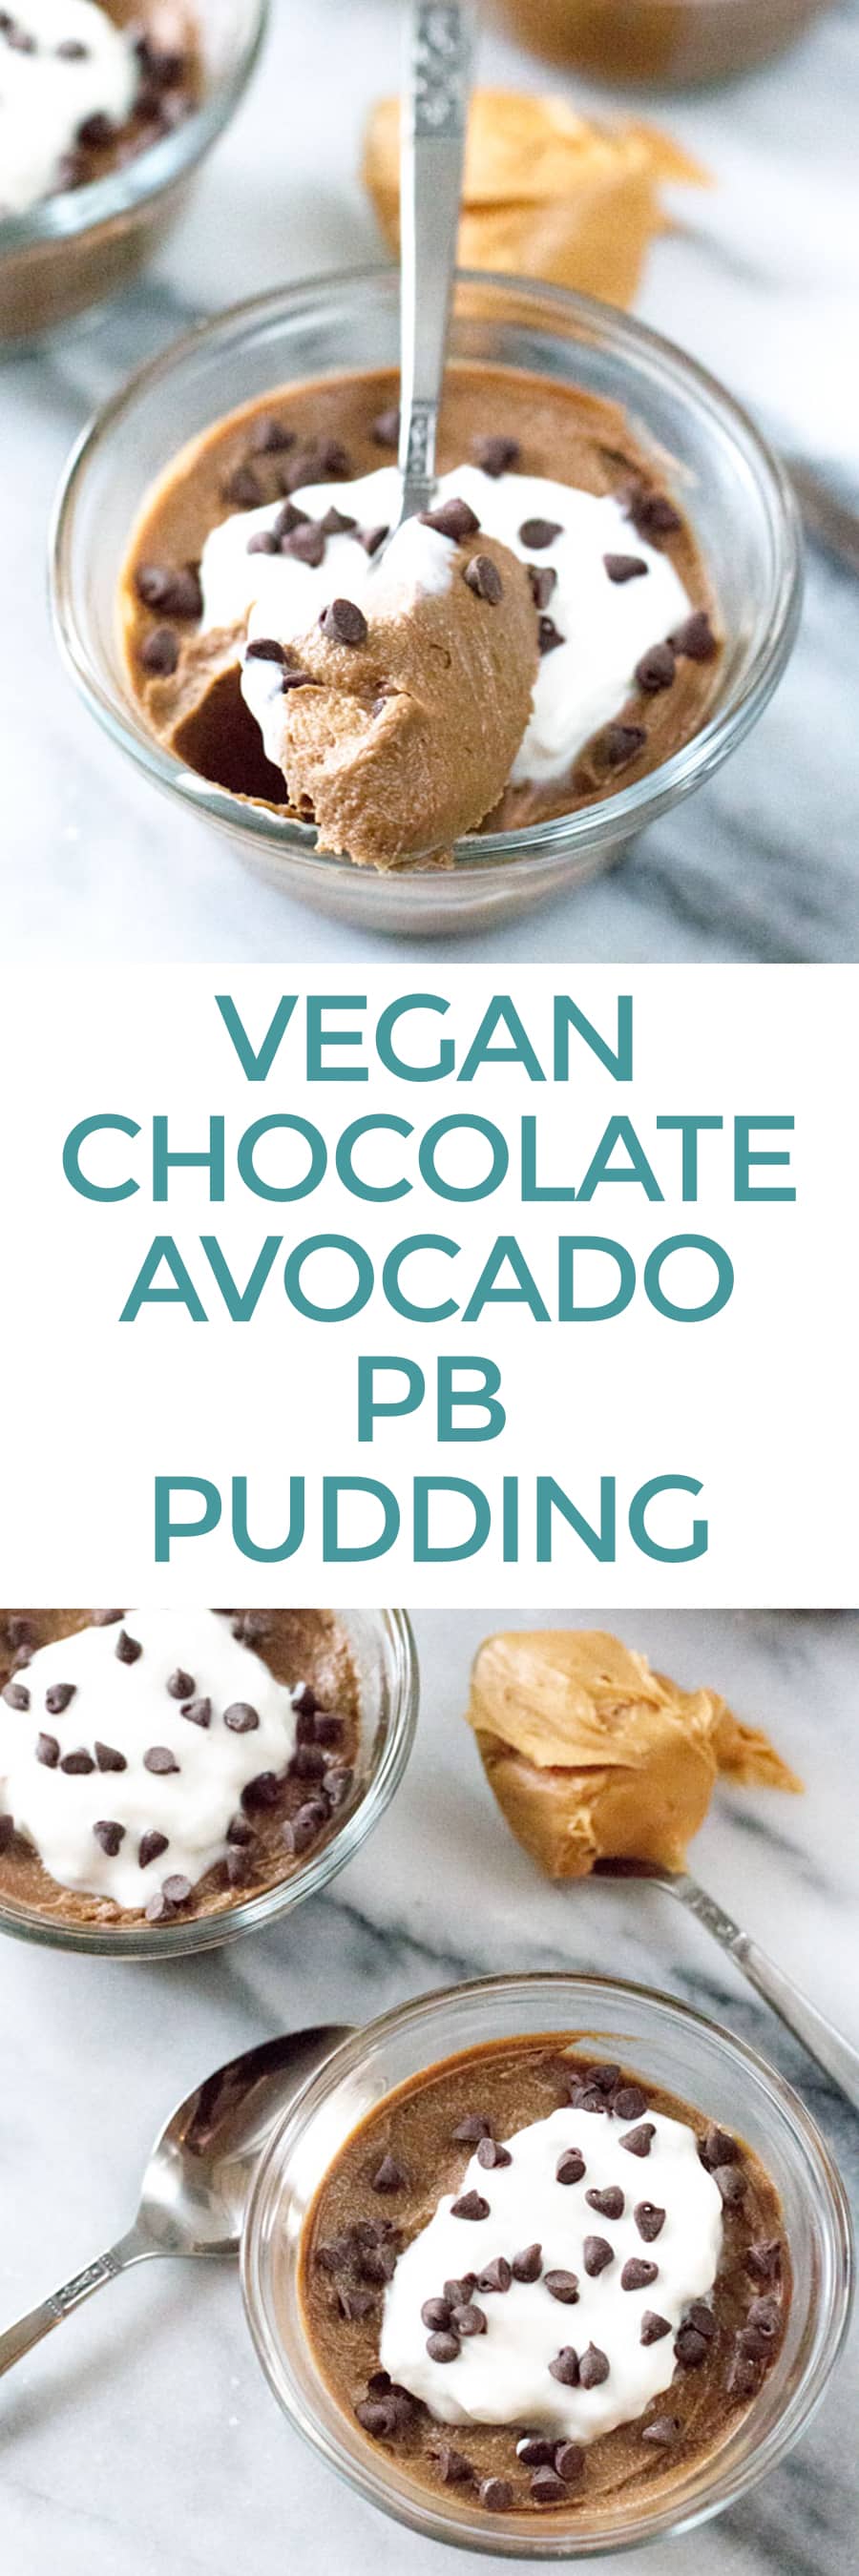 Chocolate Avocado Pudding with Coconut and Peanut Butter [VEGAN] | cakenknife.com